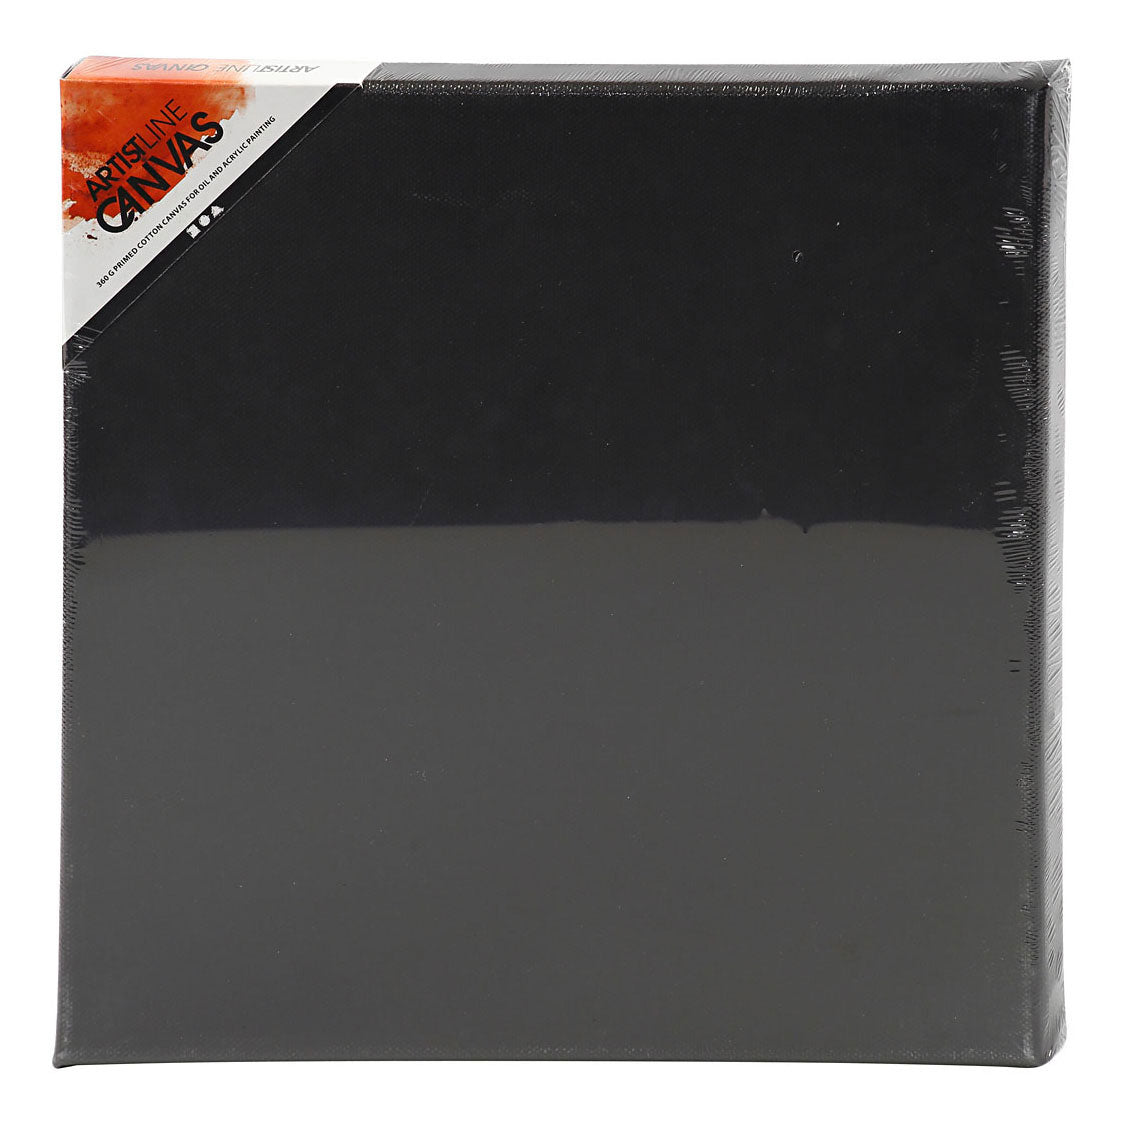 Creativ Company Artistline Canvas Black 30x30cm, 10st.